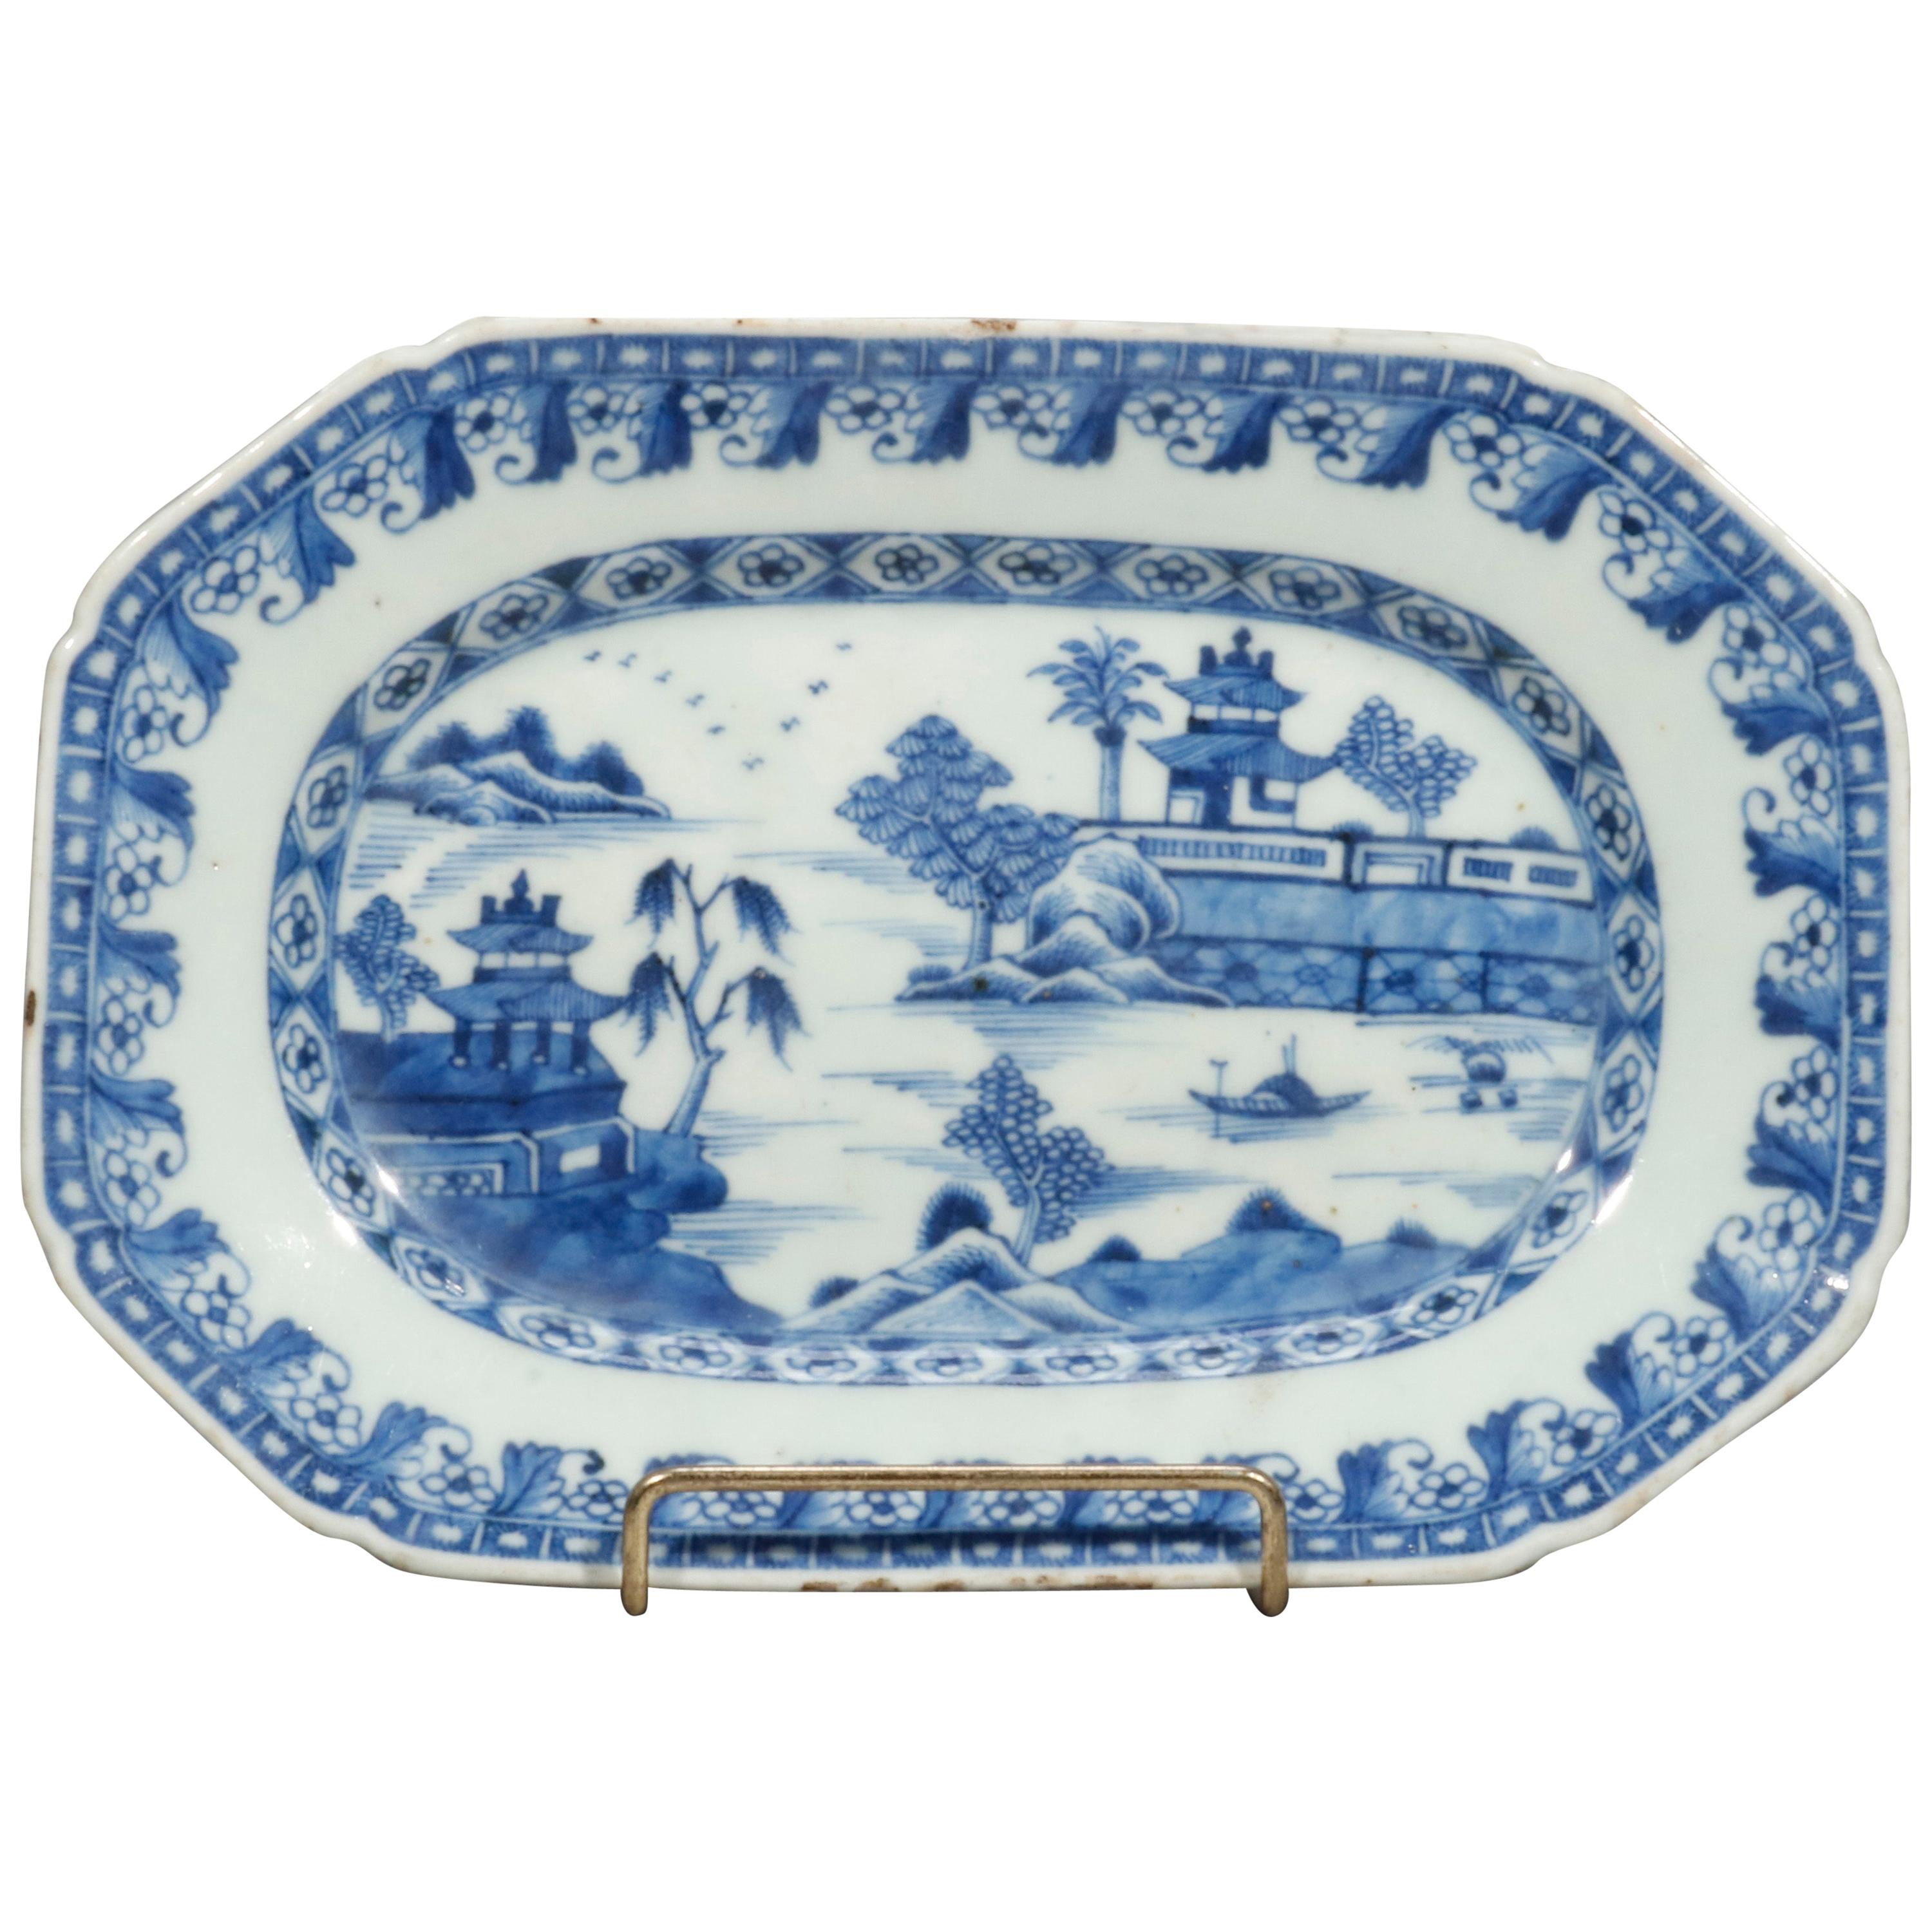 An antique Canton Chinese Export platter offers porcelain construction in rectangular clip-corner form having blue transfer of landscape scene having village elements including pagodas, 19th century.

Measures- 9.88